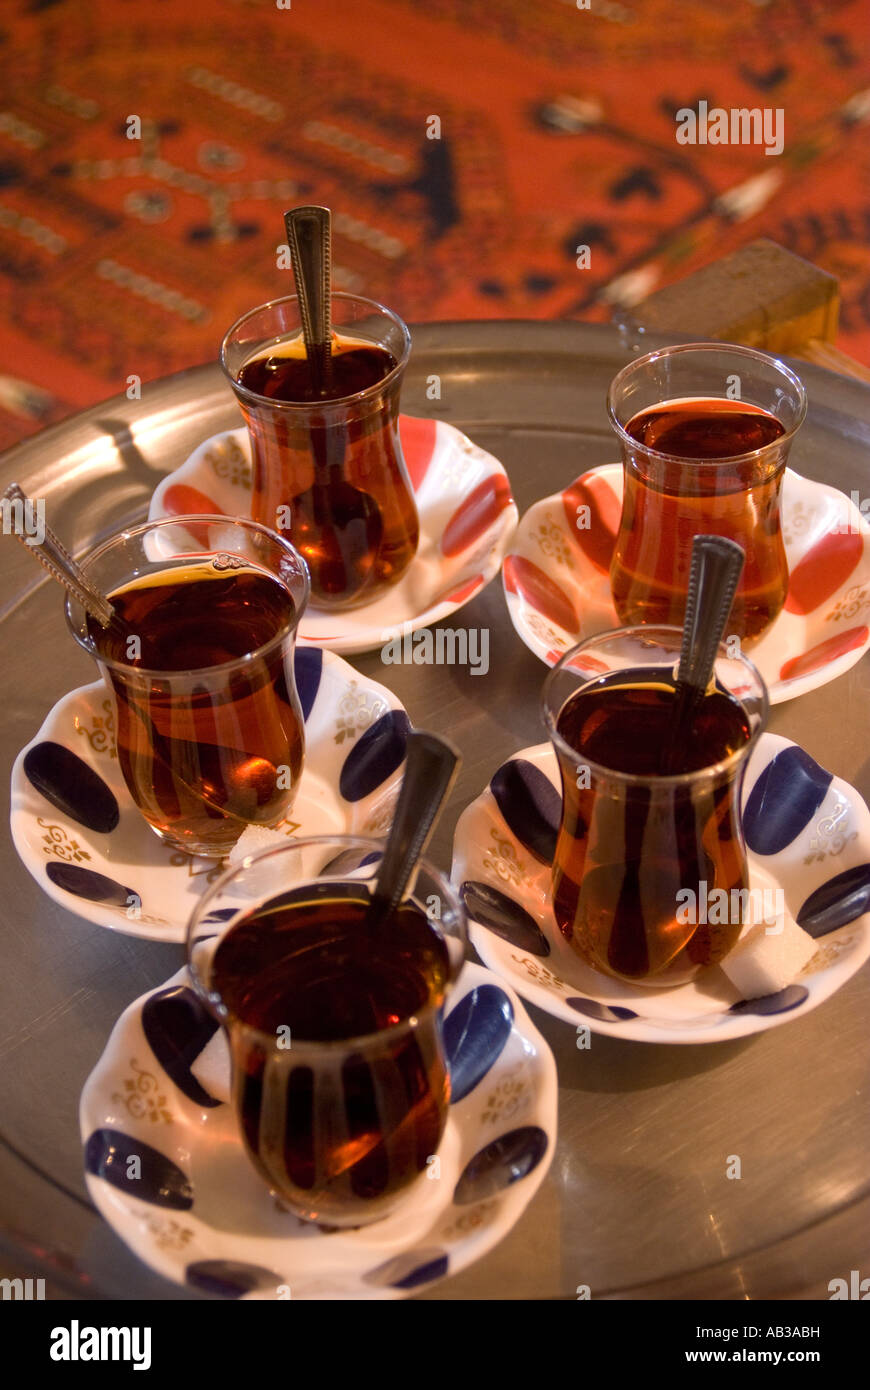 Turkish tea pot with glass of tea Stock Photo - Alamy